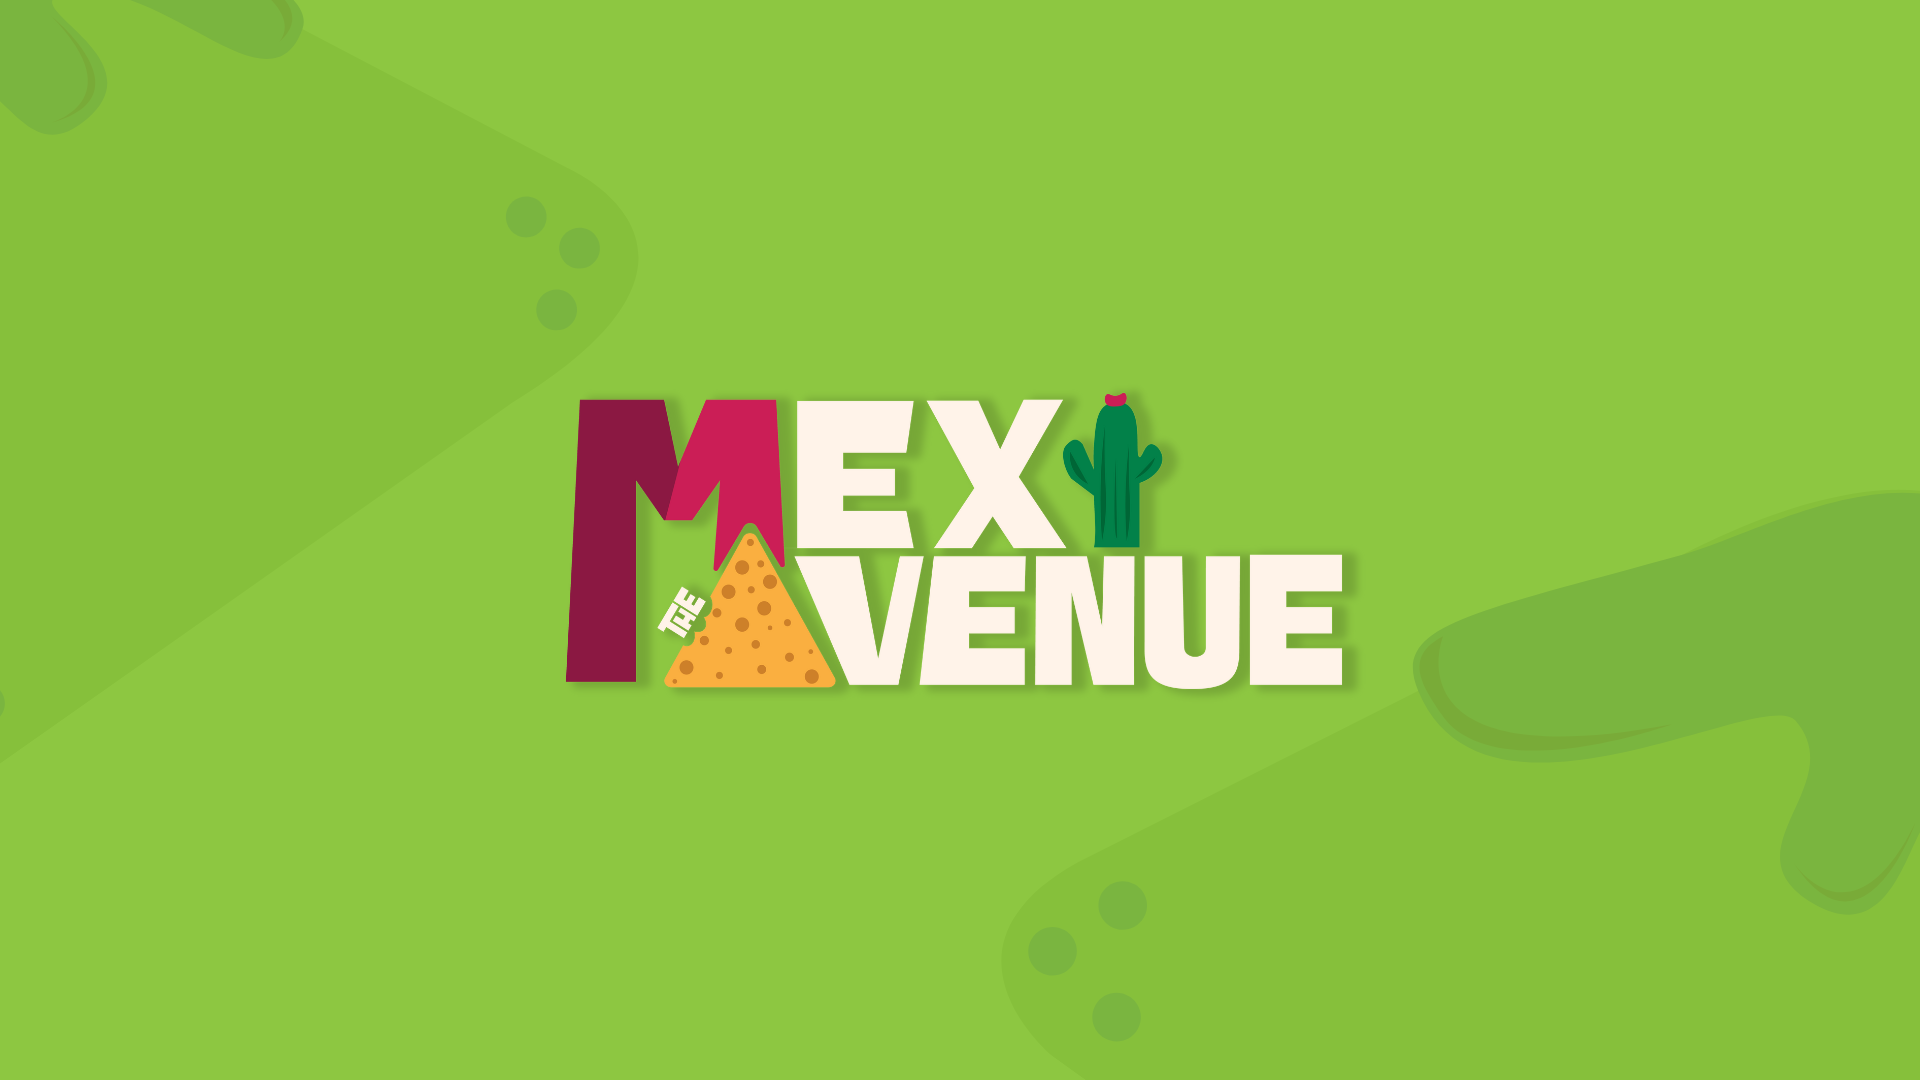 The Mex Avenue - Brand Identity on Behance